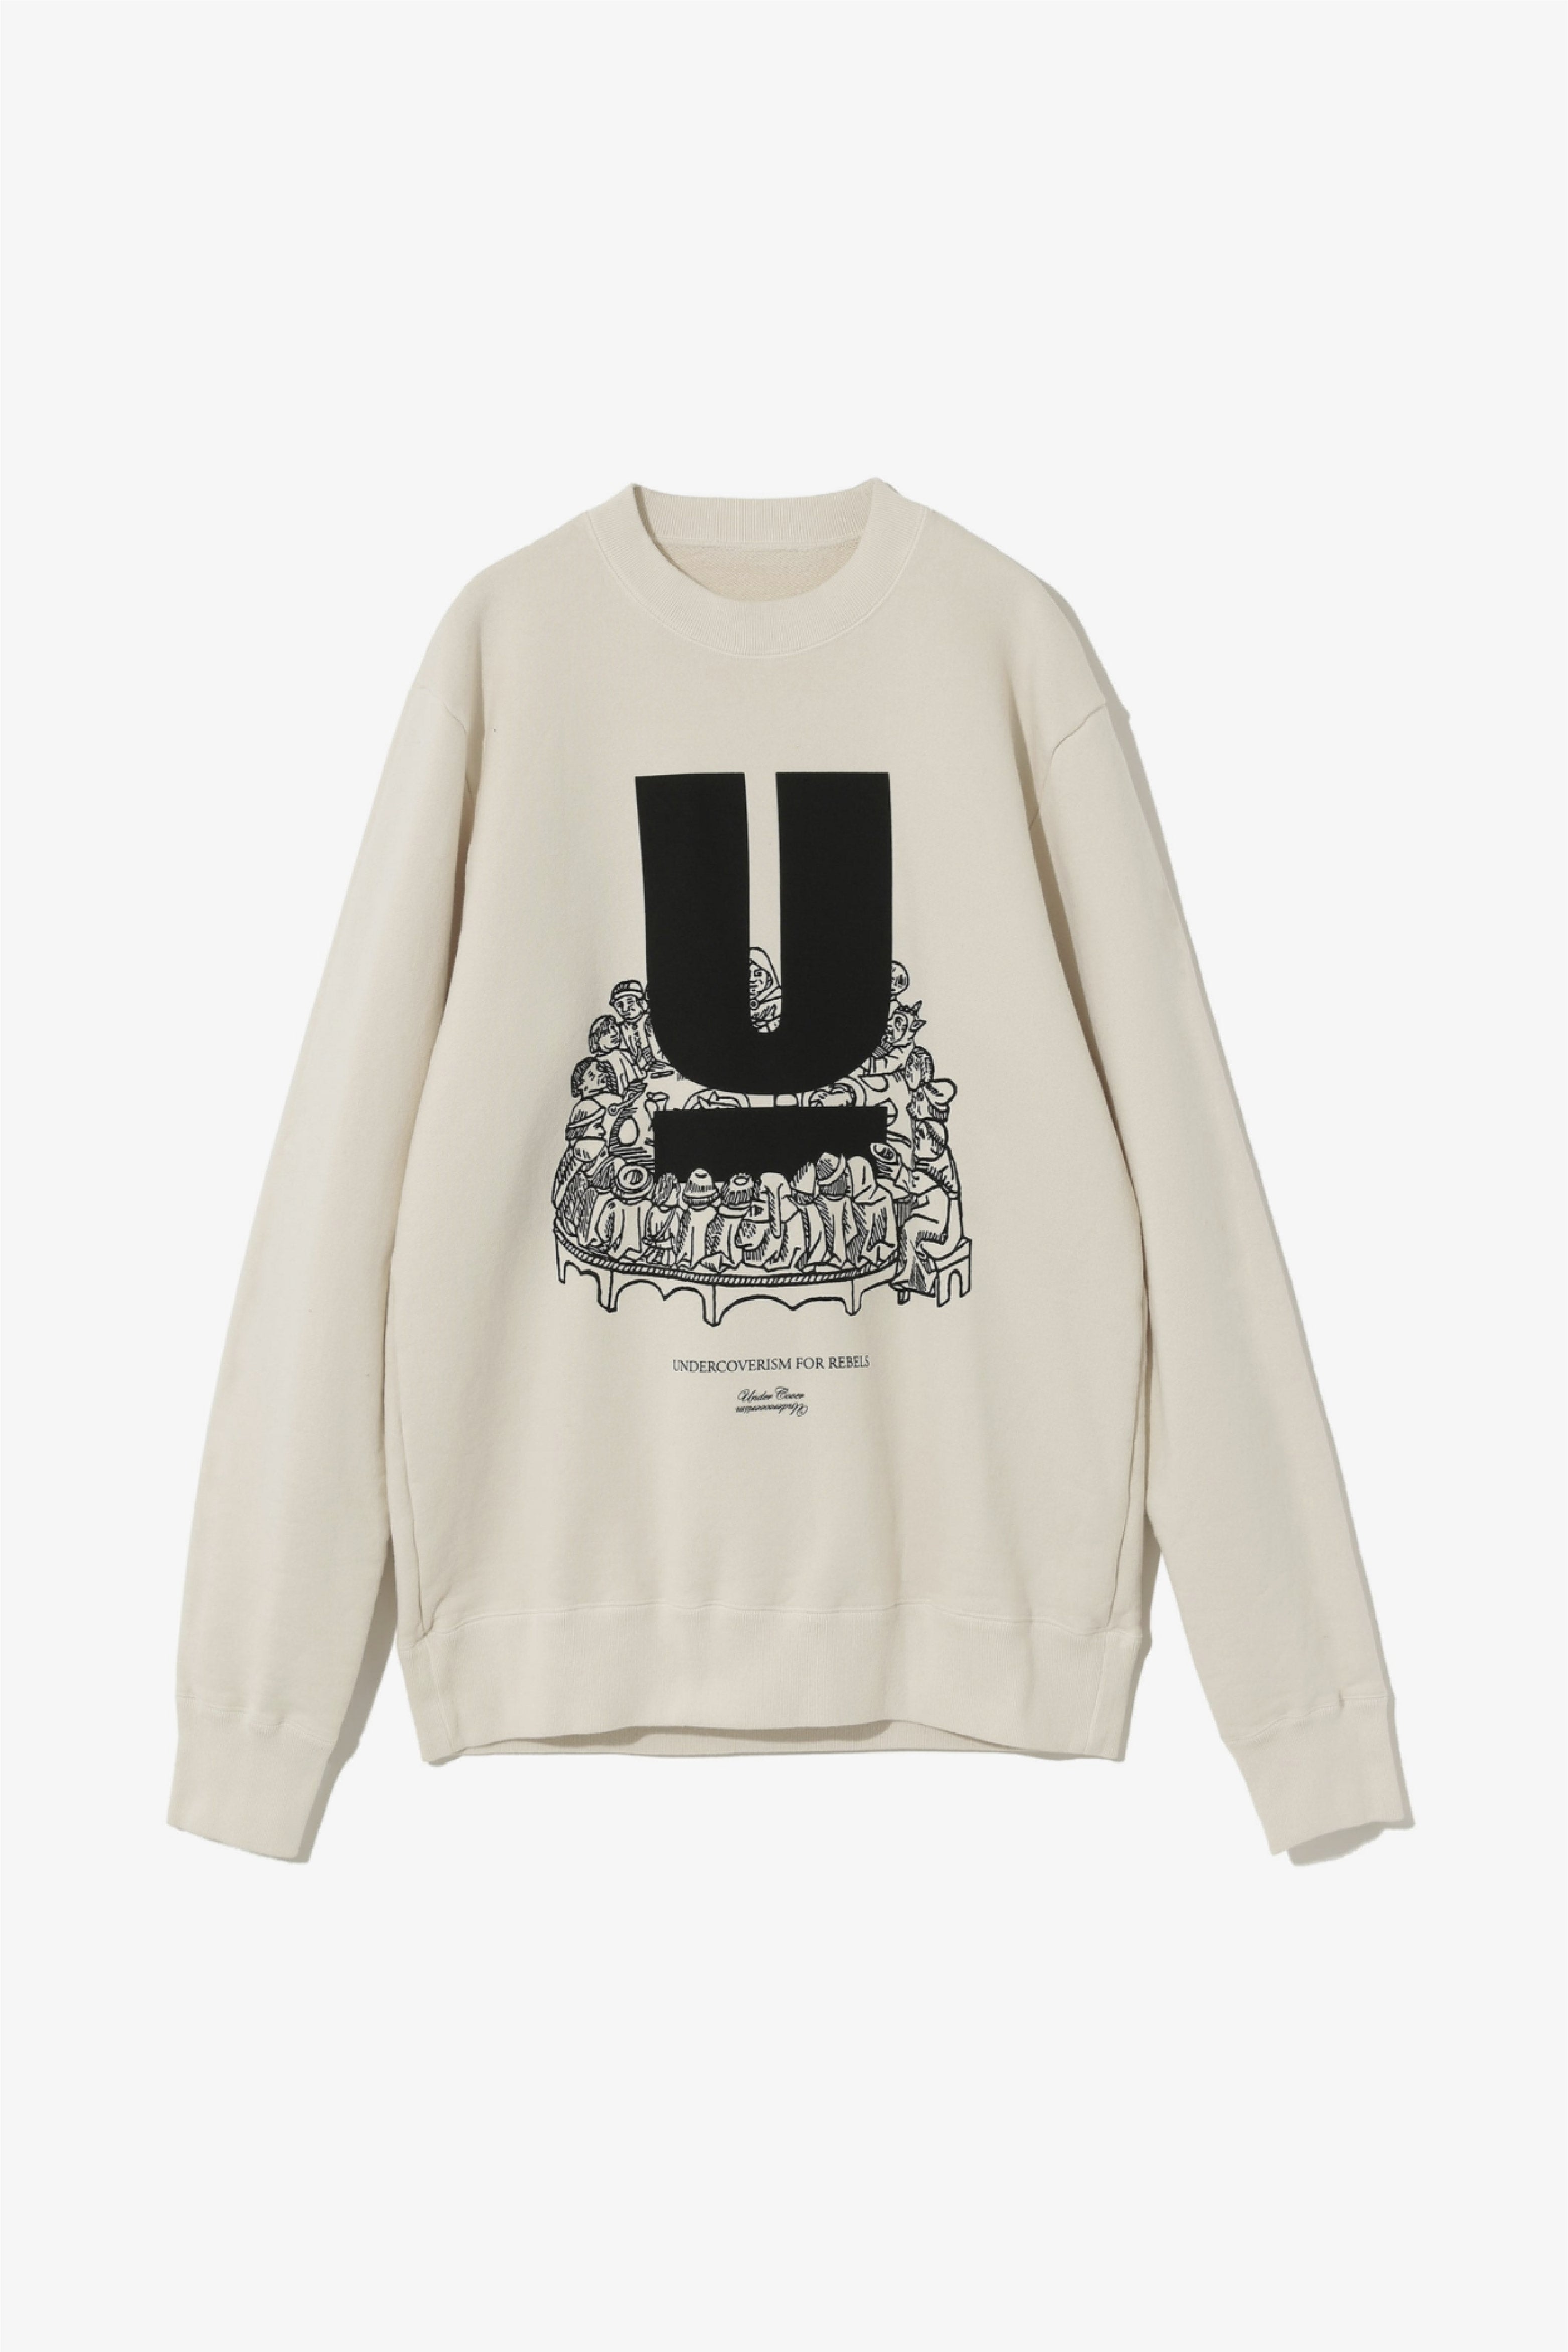 Selectshop FRAME - UNDERCOVER Crewneck Sweatshirt Sweats-knits Dubai